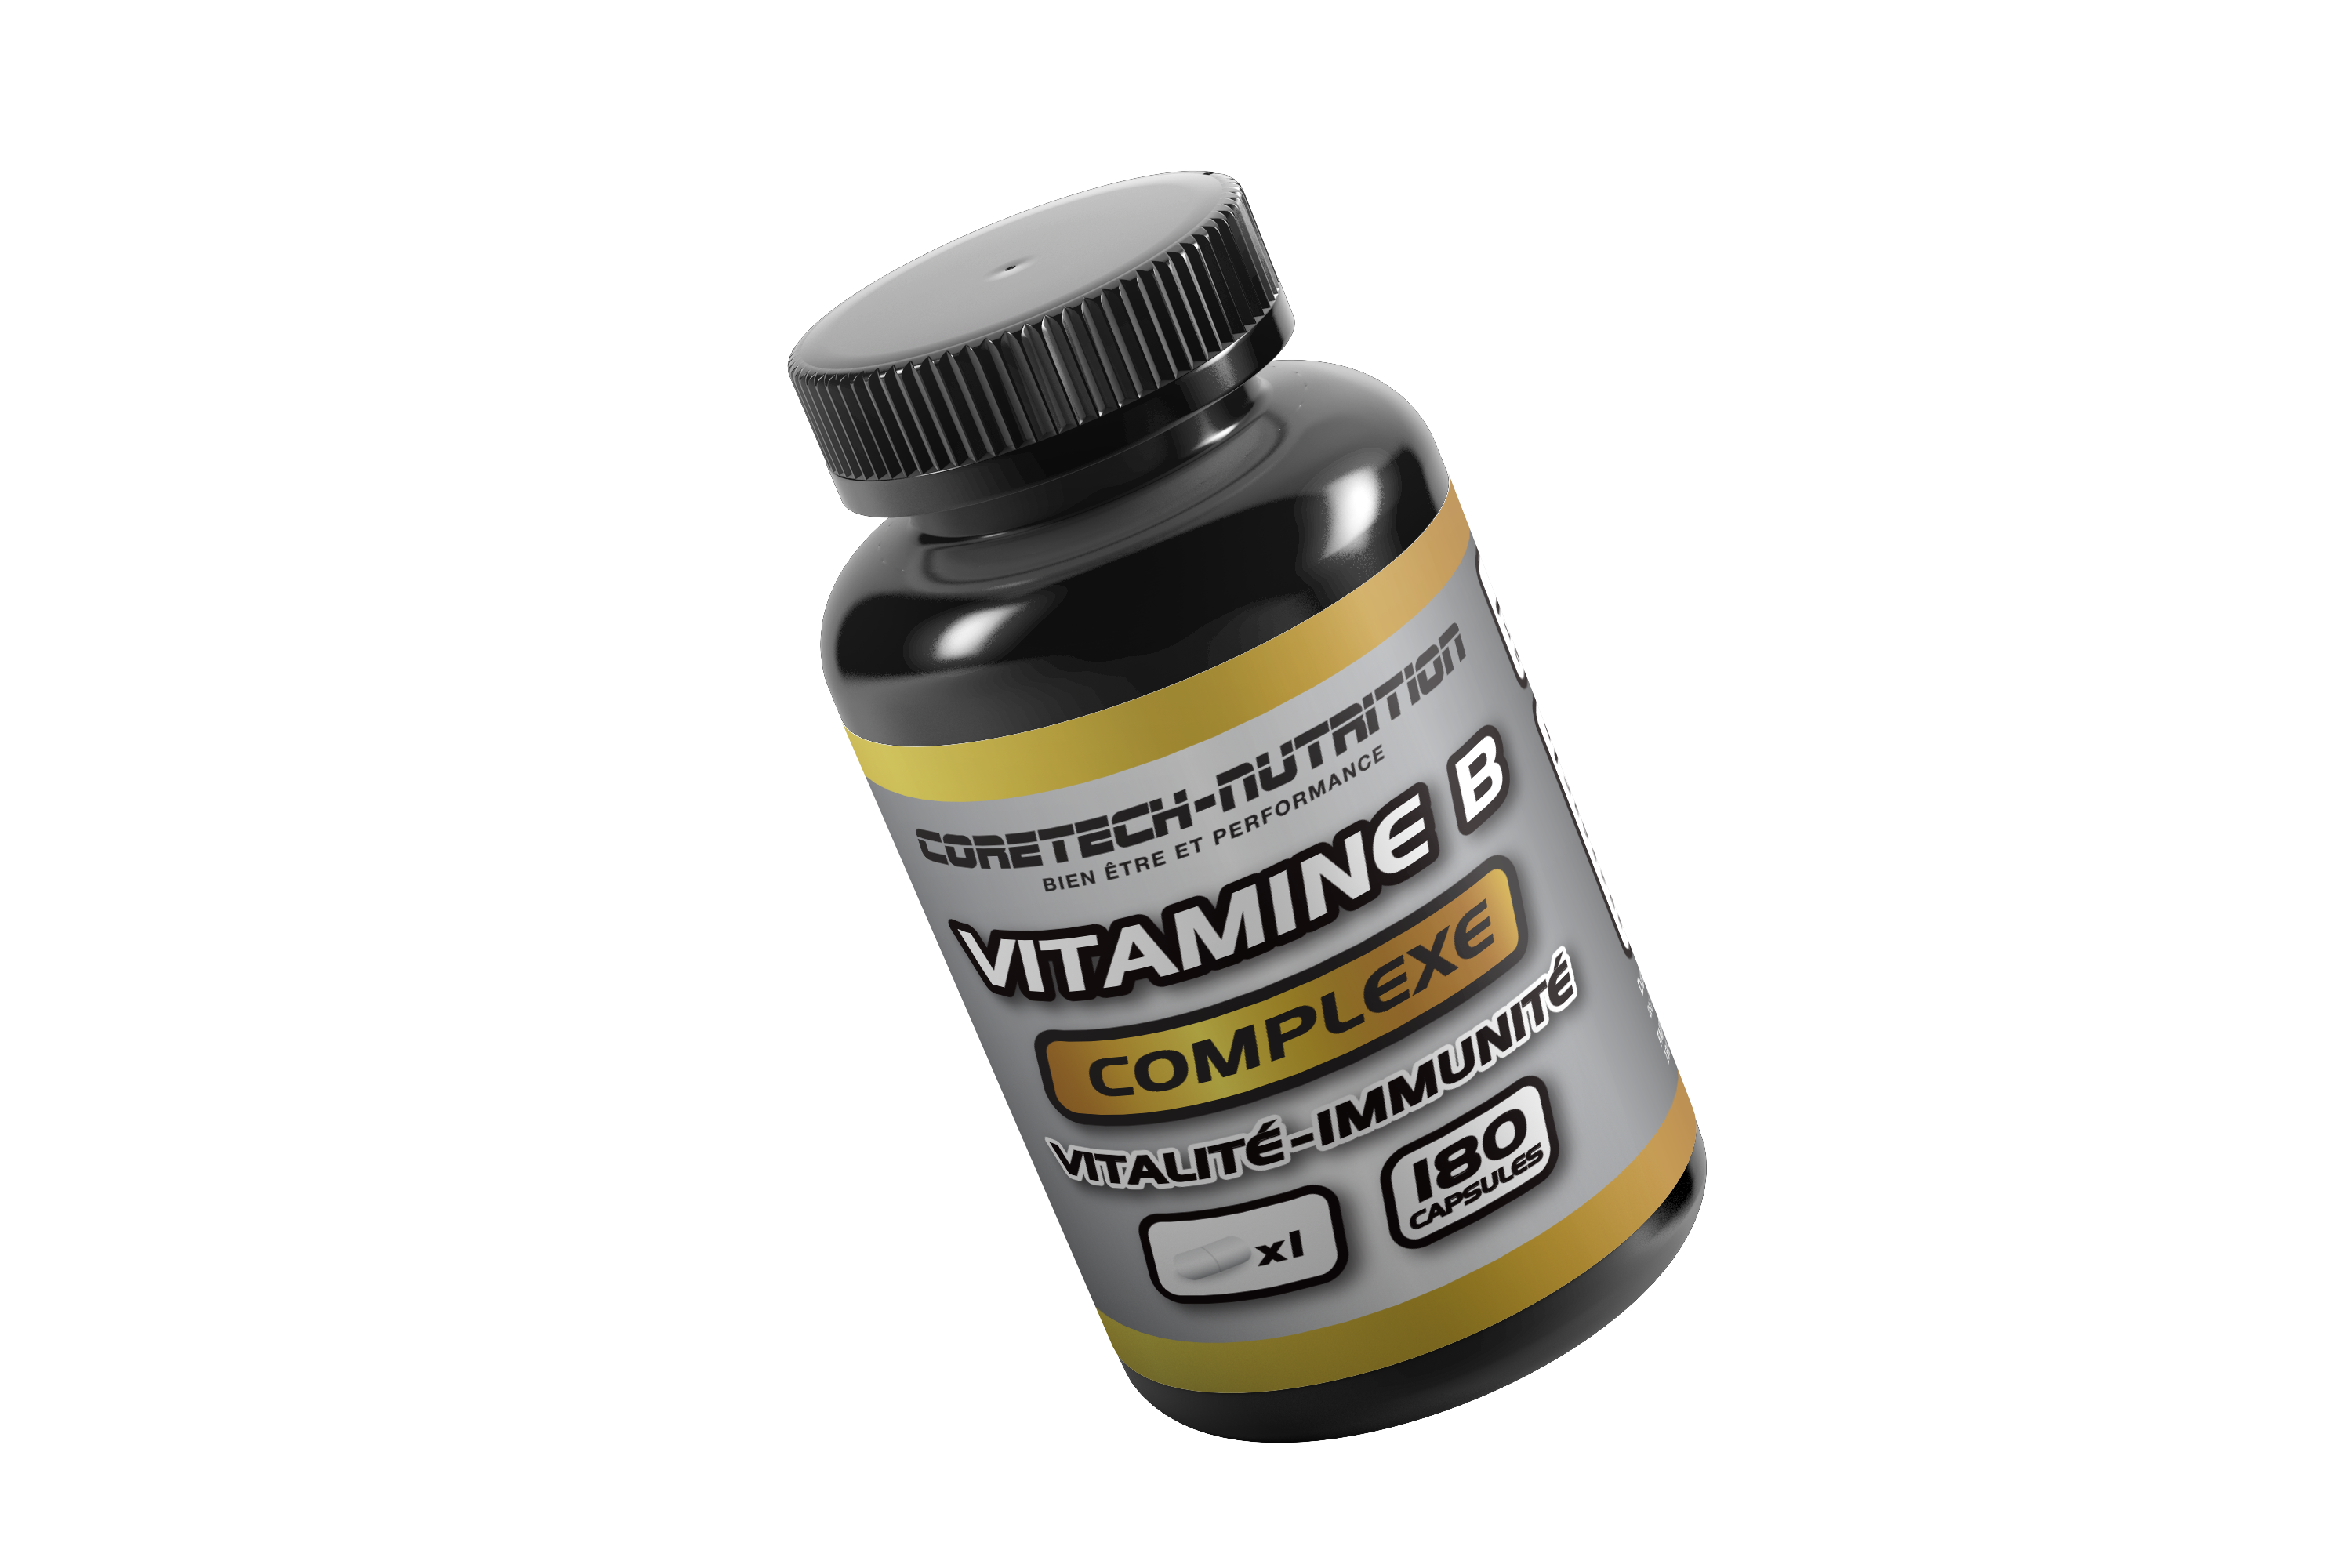 Vitamine B Complexe